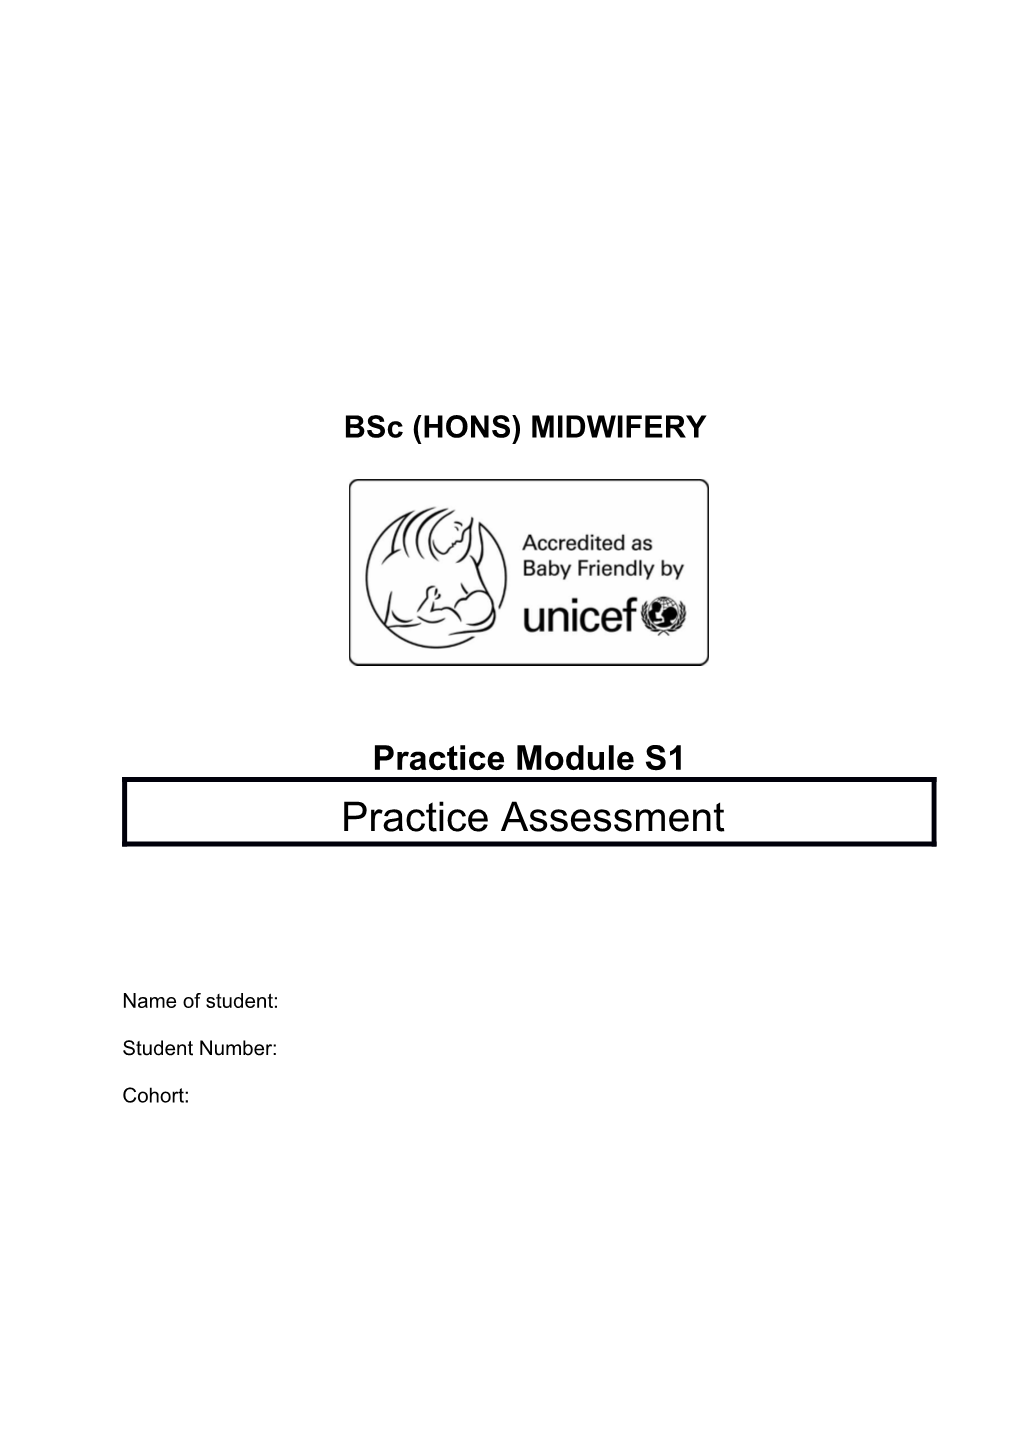 Midwifery Practice Module S1 - Practice Assessment Document